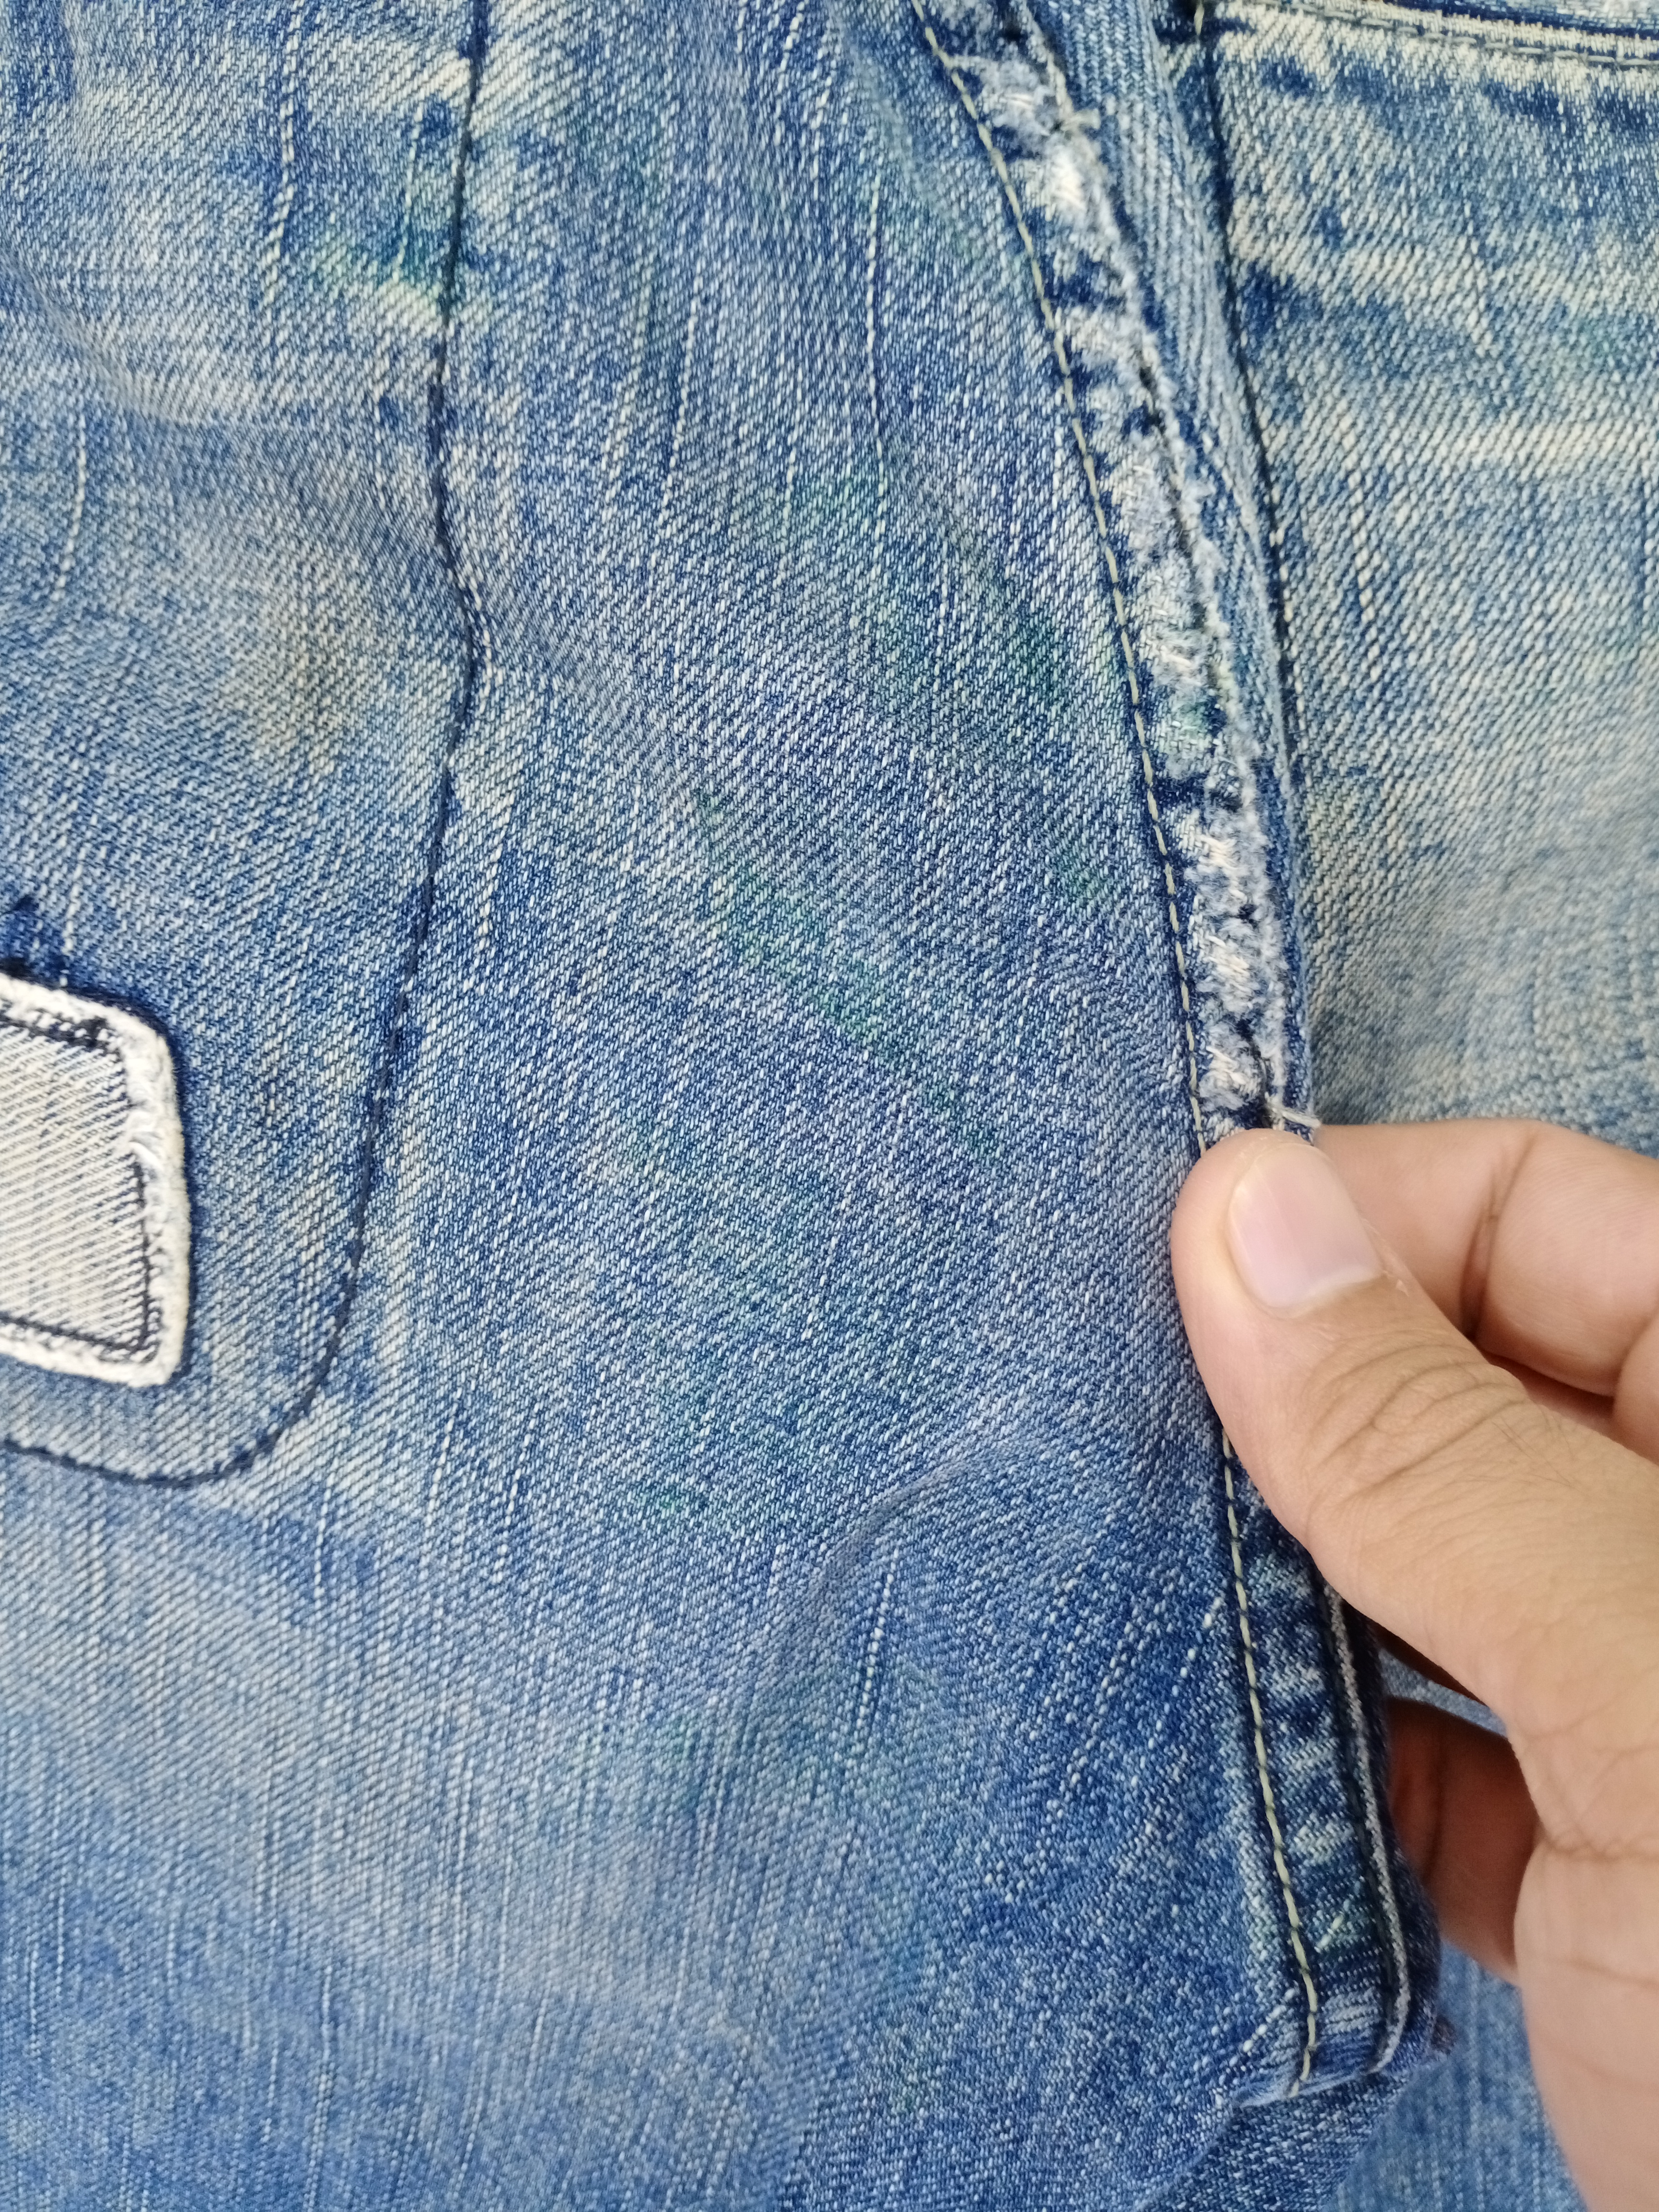 💥RARE💥Diesel Medium Wash Patches Distressed Jeans - 8